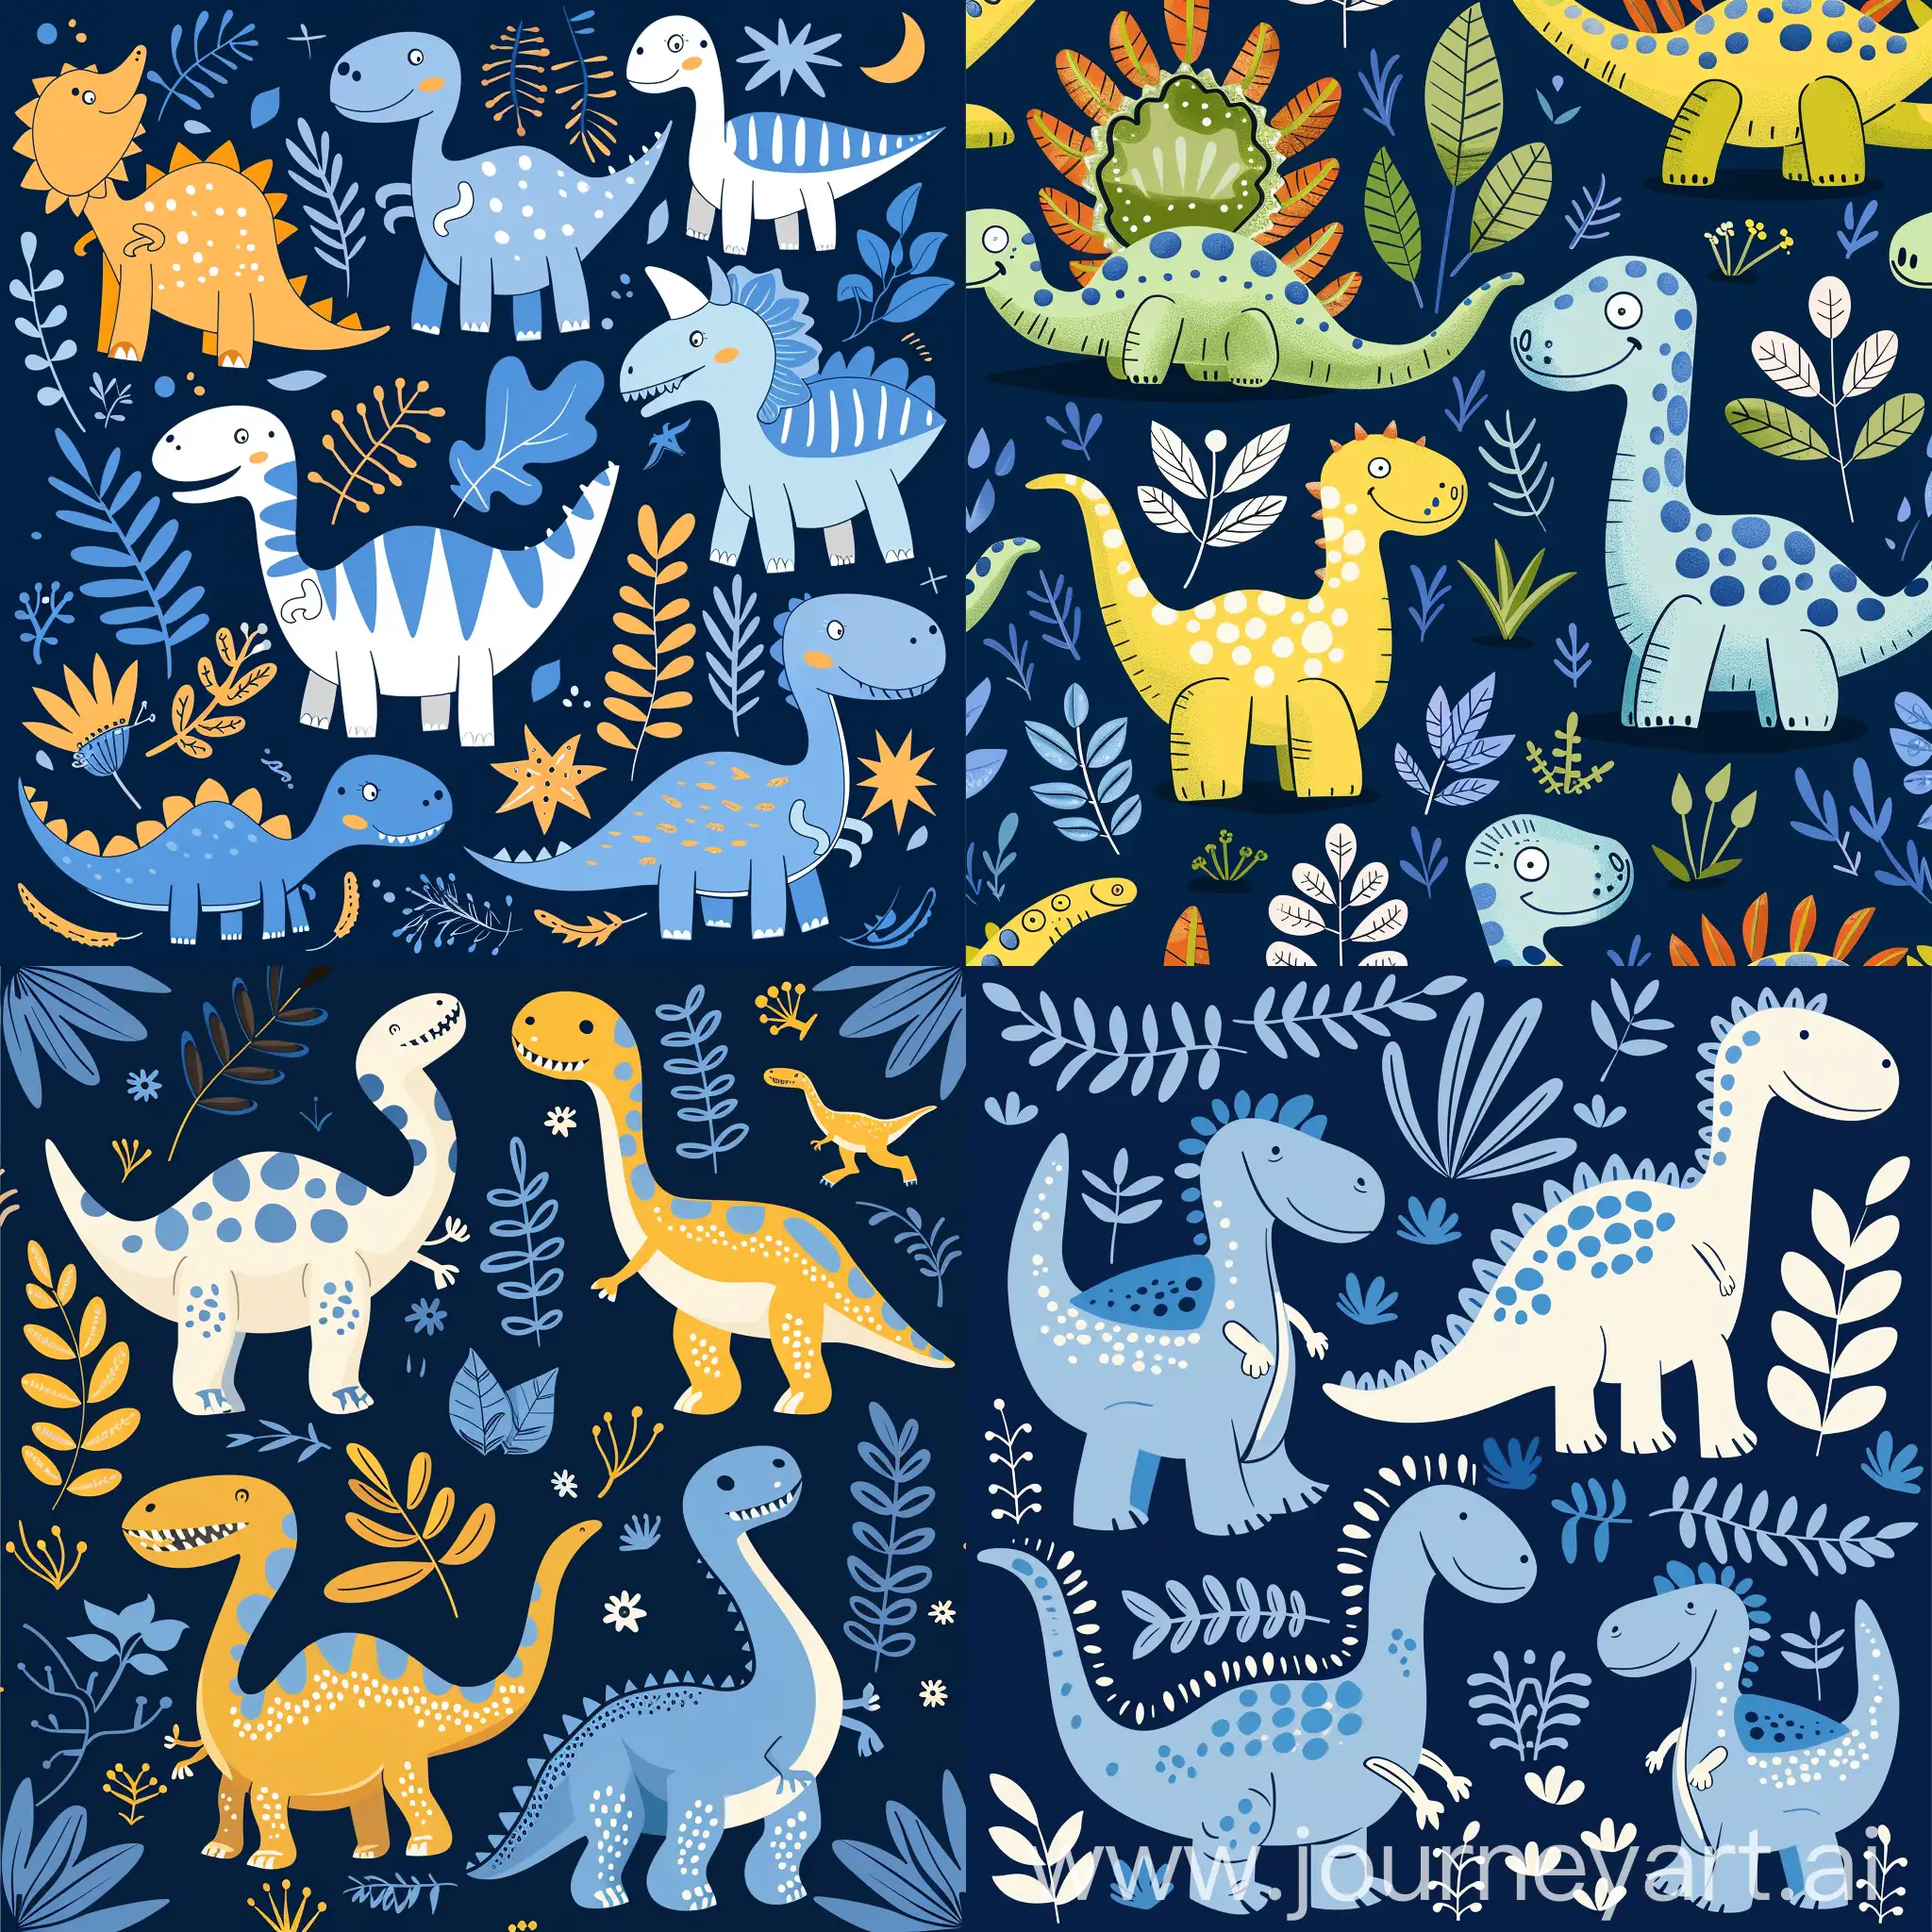 HandDrawn-Dinosaurs-in-Summer-ChildFriendly-Patterns-in-Deep-Blue